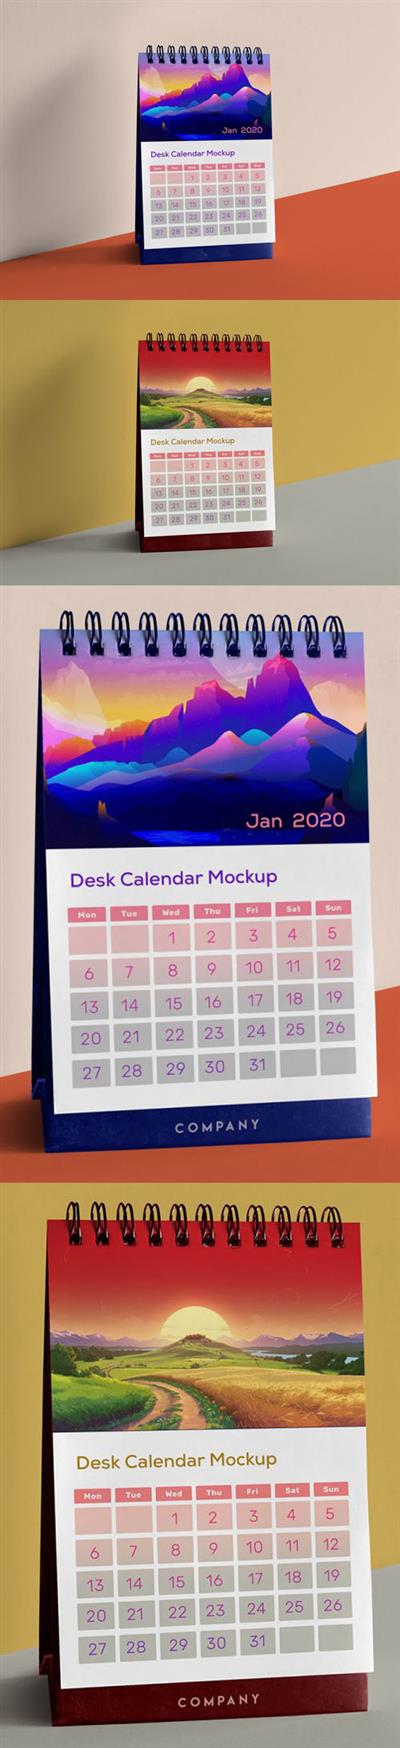 Table Desk Calendar 2020 Mockup PSD Template